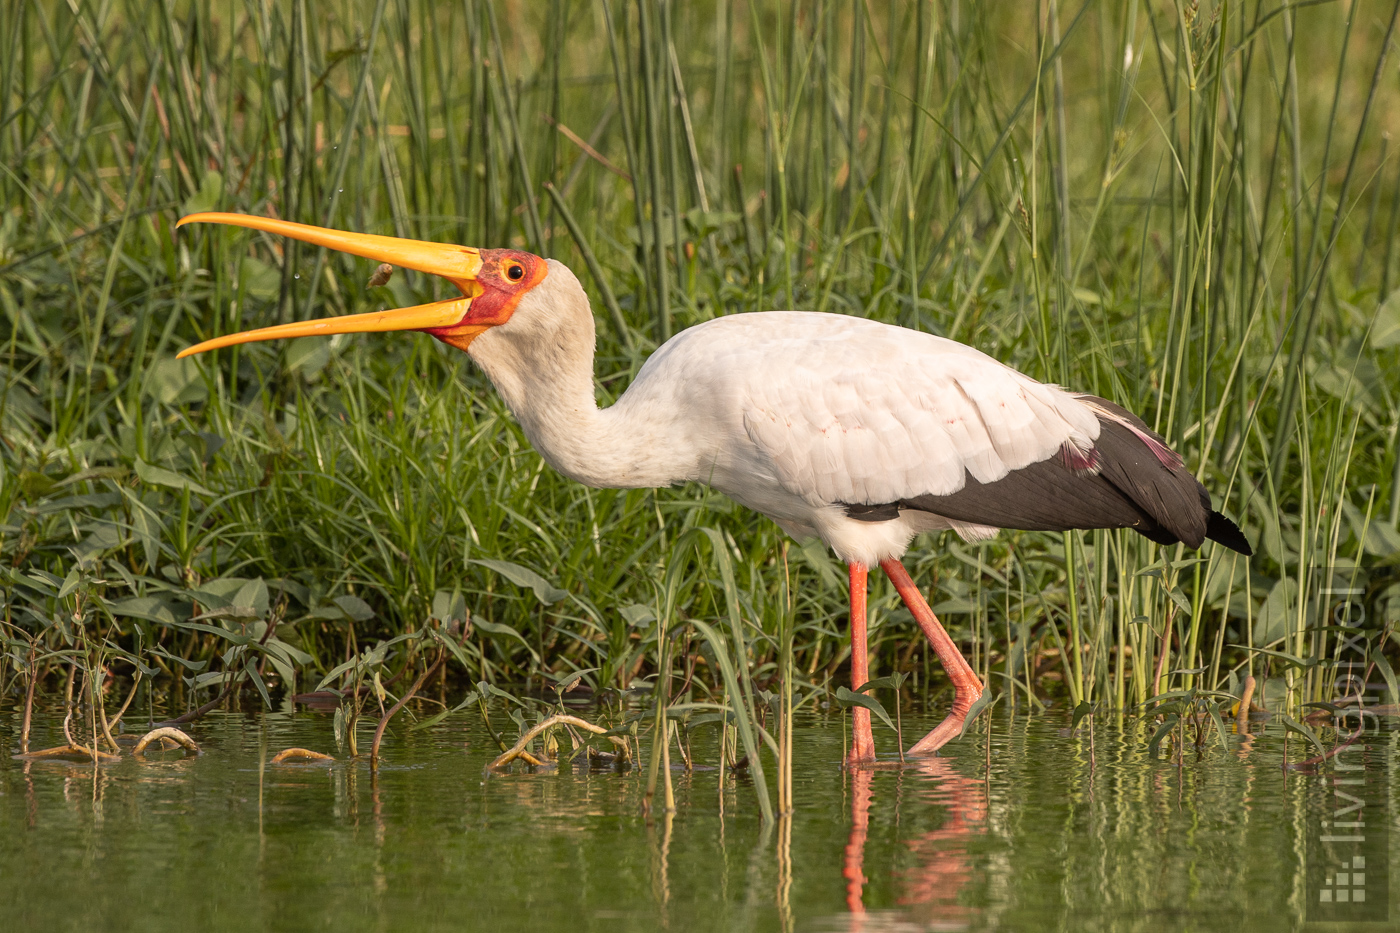 Nimmersatt (Yellow-billed stork)